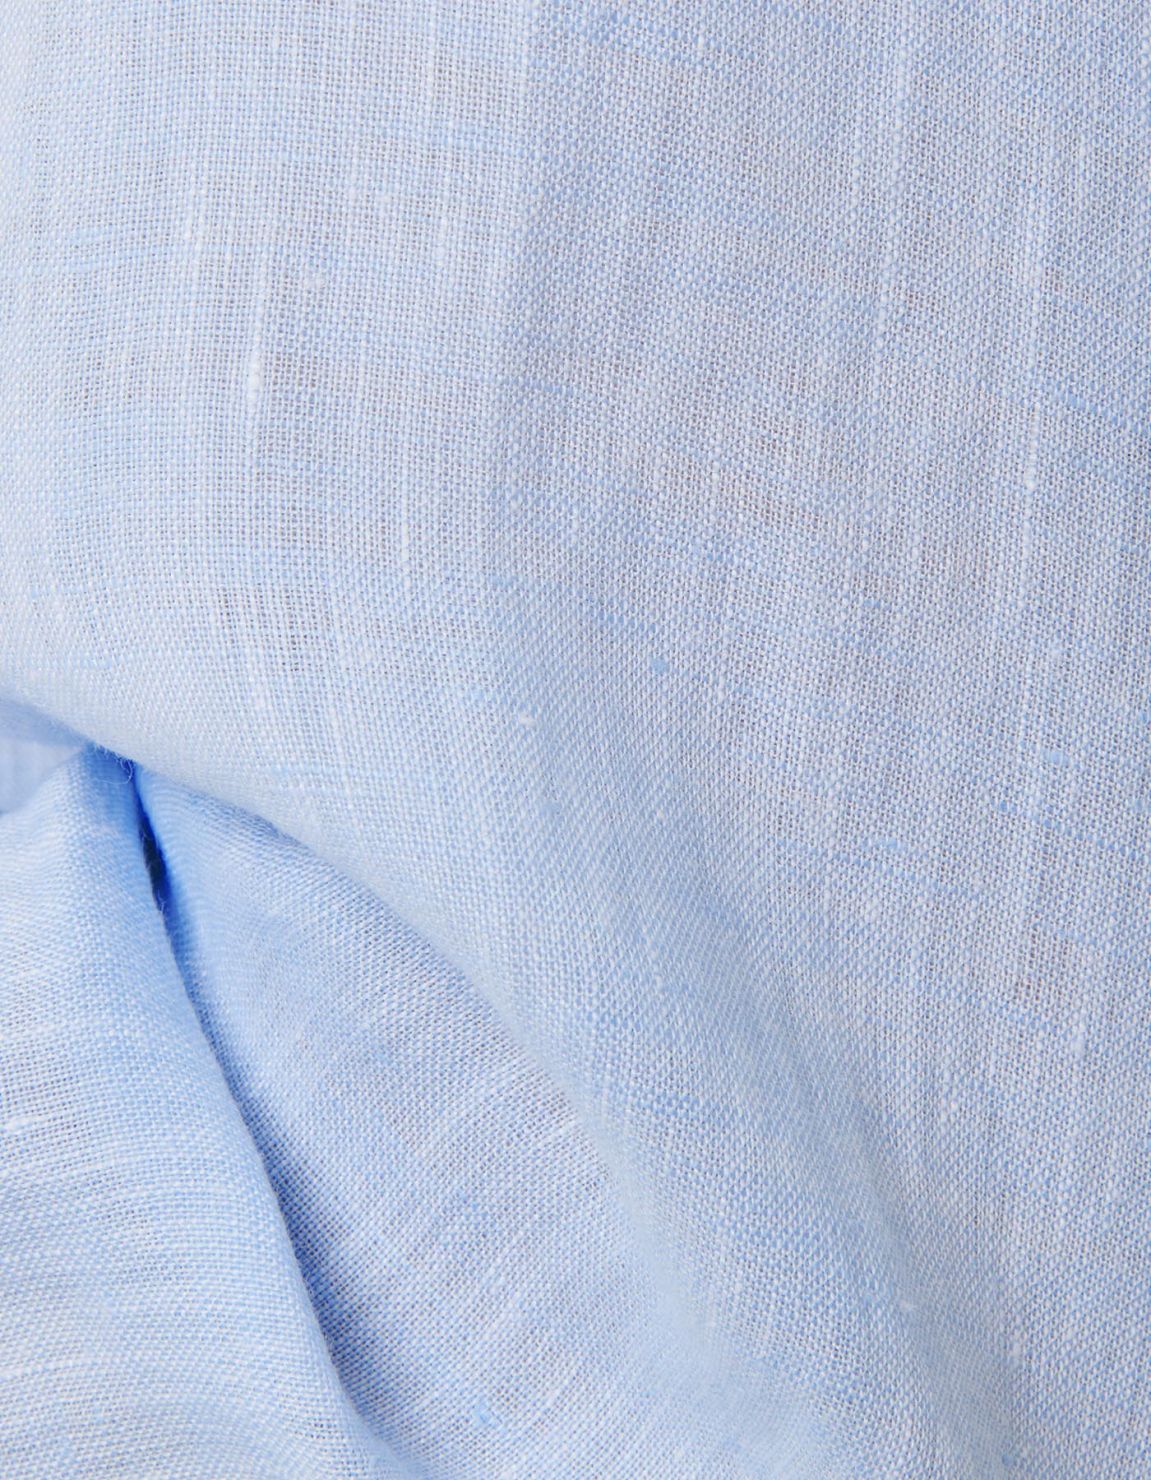 Light Blue Linen Solid colour Shirt Collar open spread Evolution Classic Fit 4